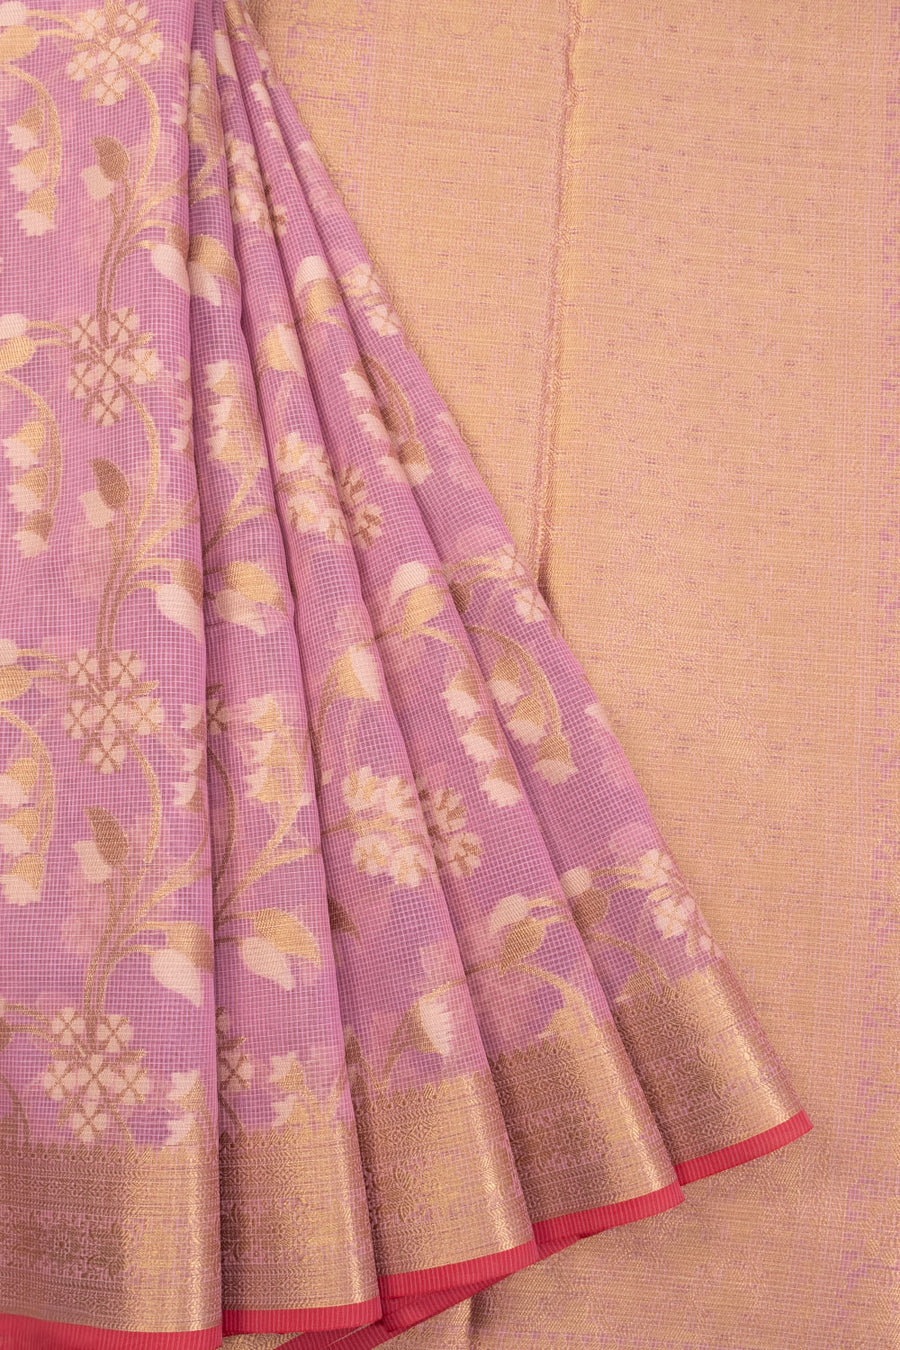 Lavender  Handloom Banarasi Silk Cotton Saree 10070504 - Avishya